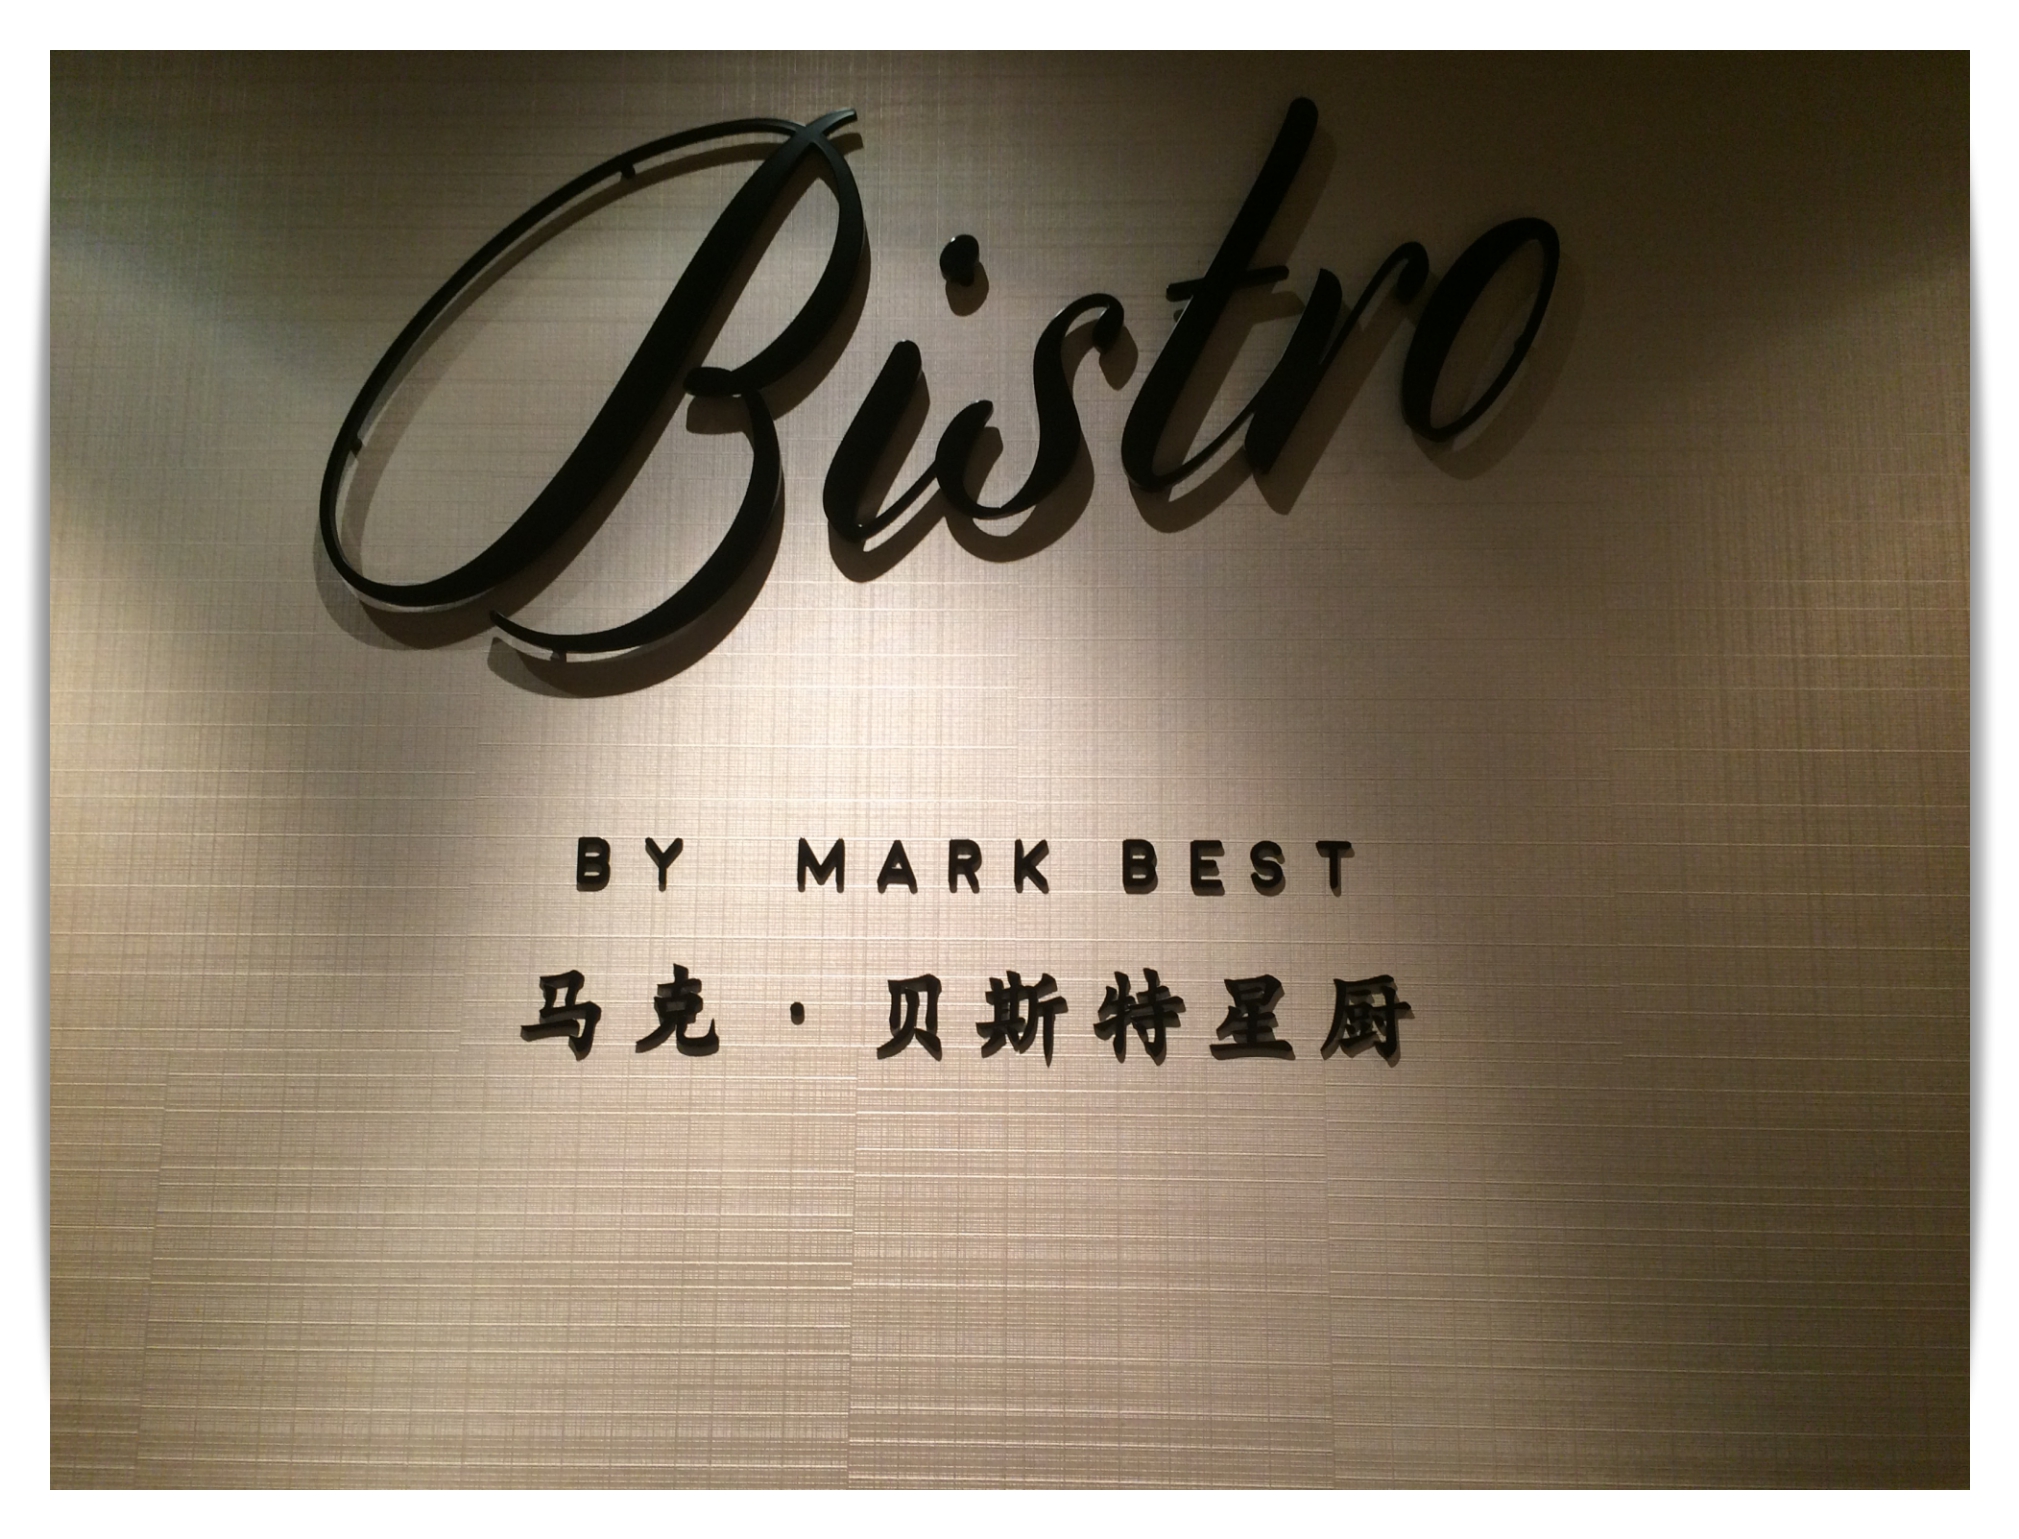 Bistro by Mark Best Entrance